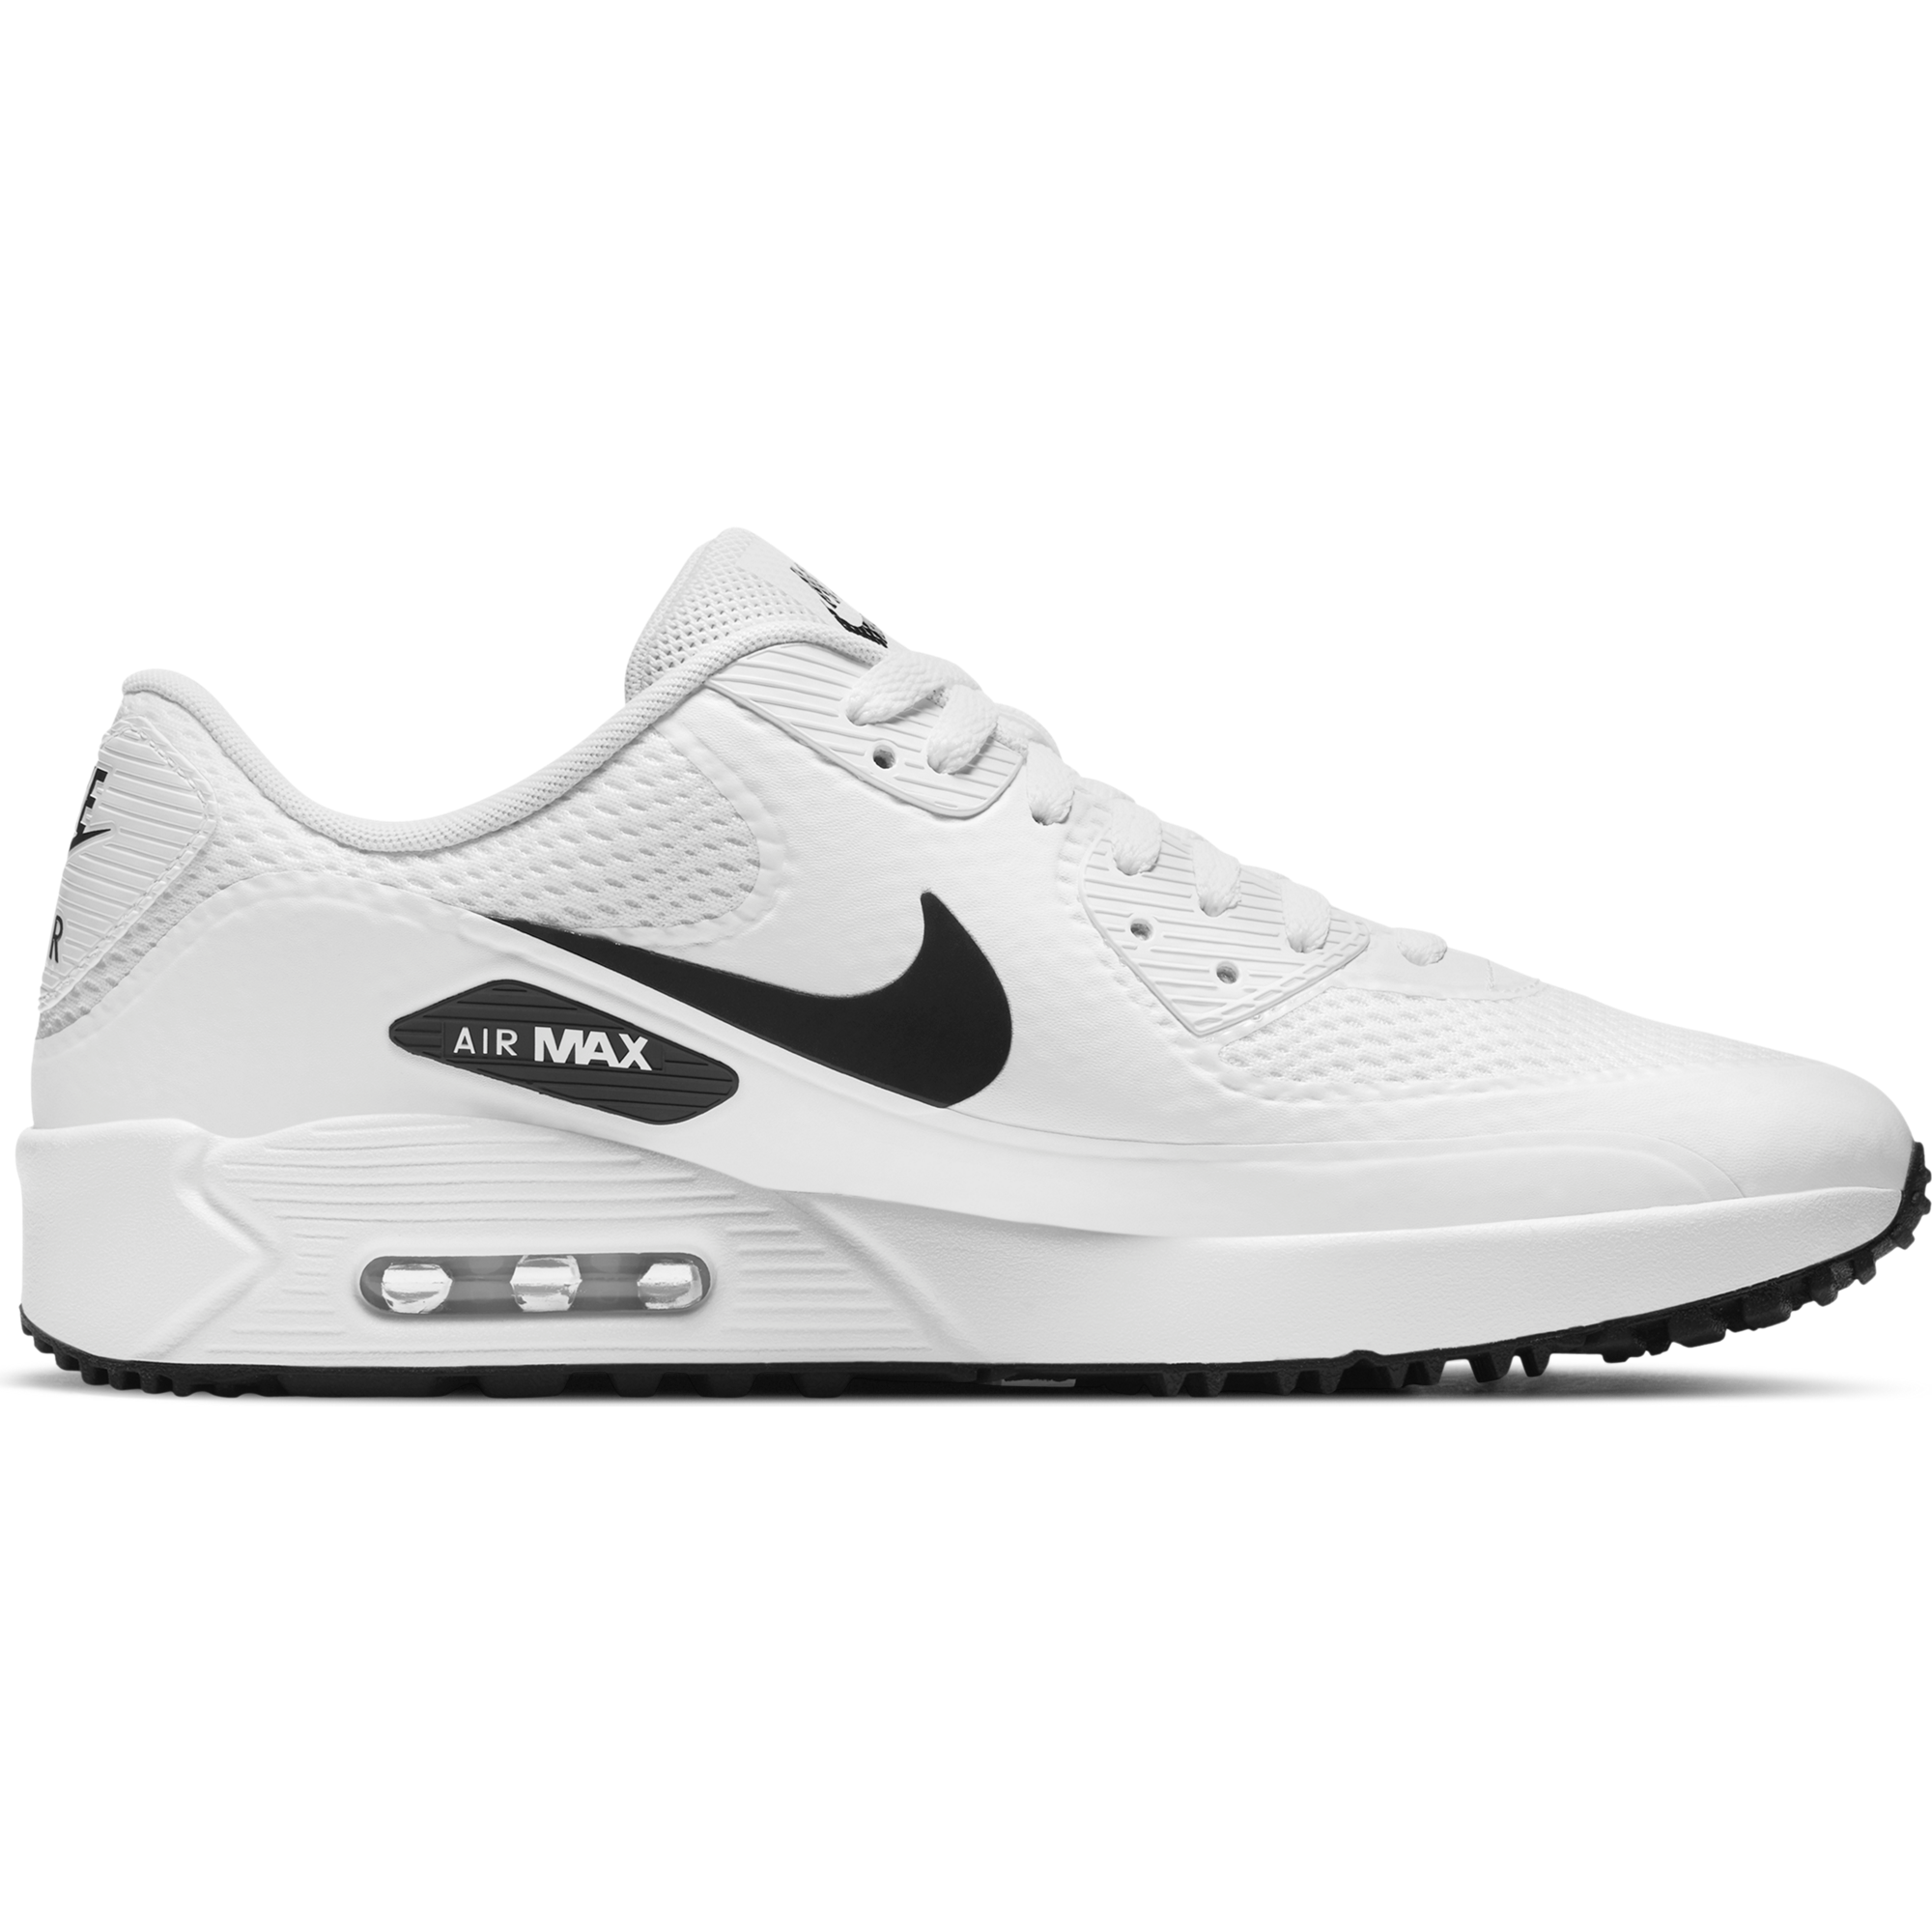 Air Max 90 G Spikeless Golf Shoe - White/Black, NIKE